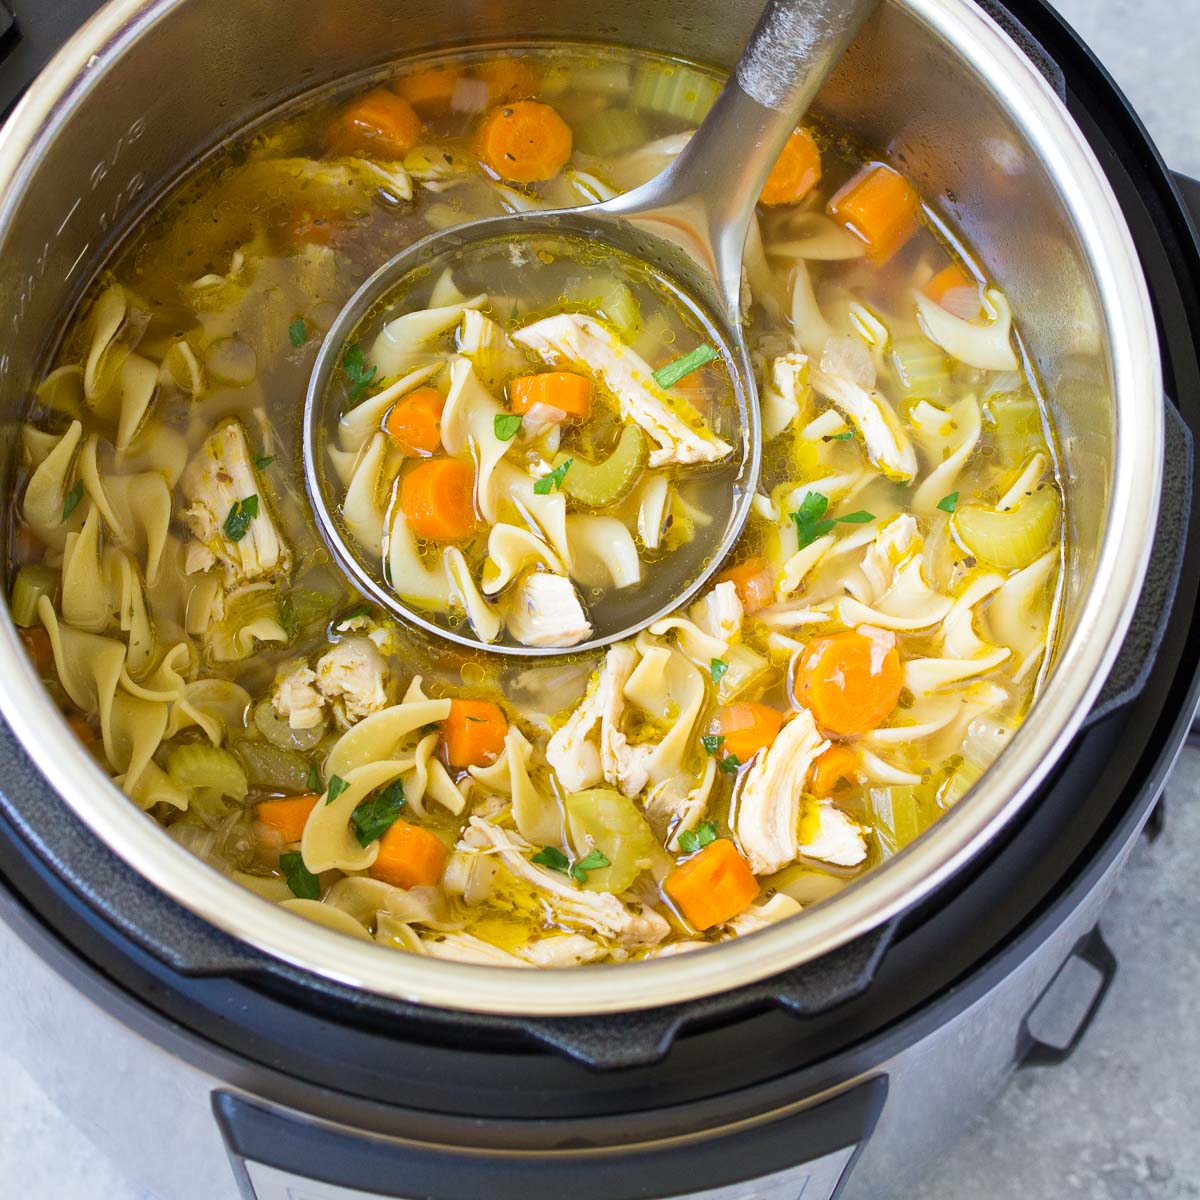 https://kristineskitchenblog.com/wp-content/uploads/2021/04/instant-pot-chicken-noodle-soup-1200-square-868.jpg